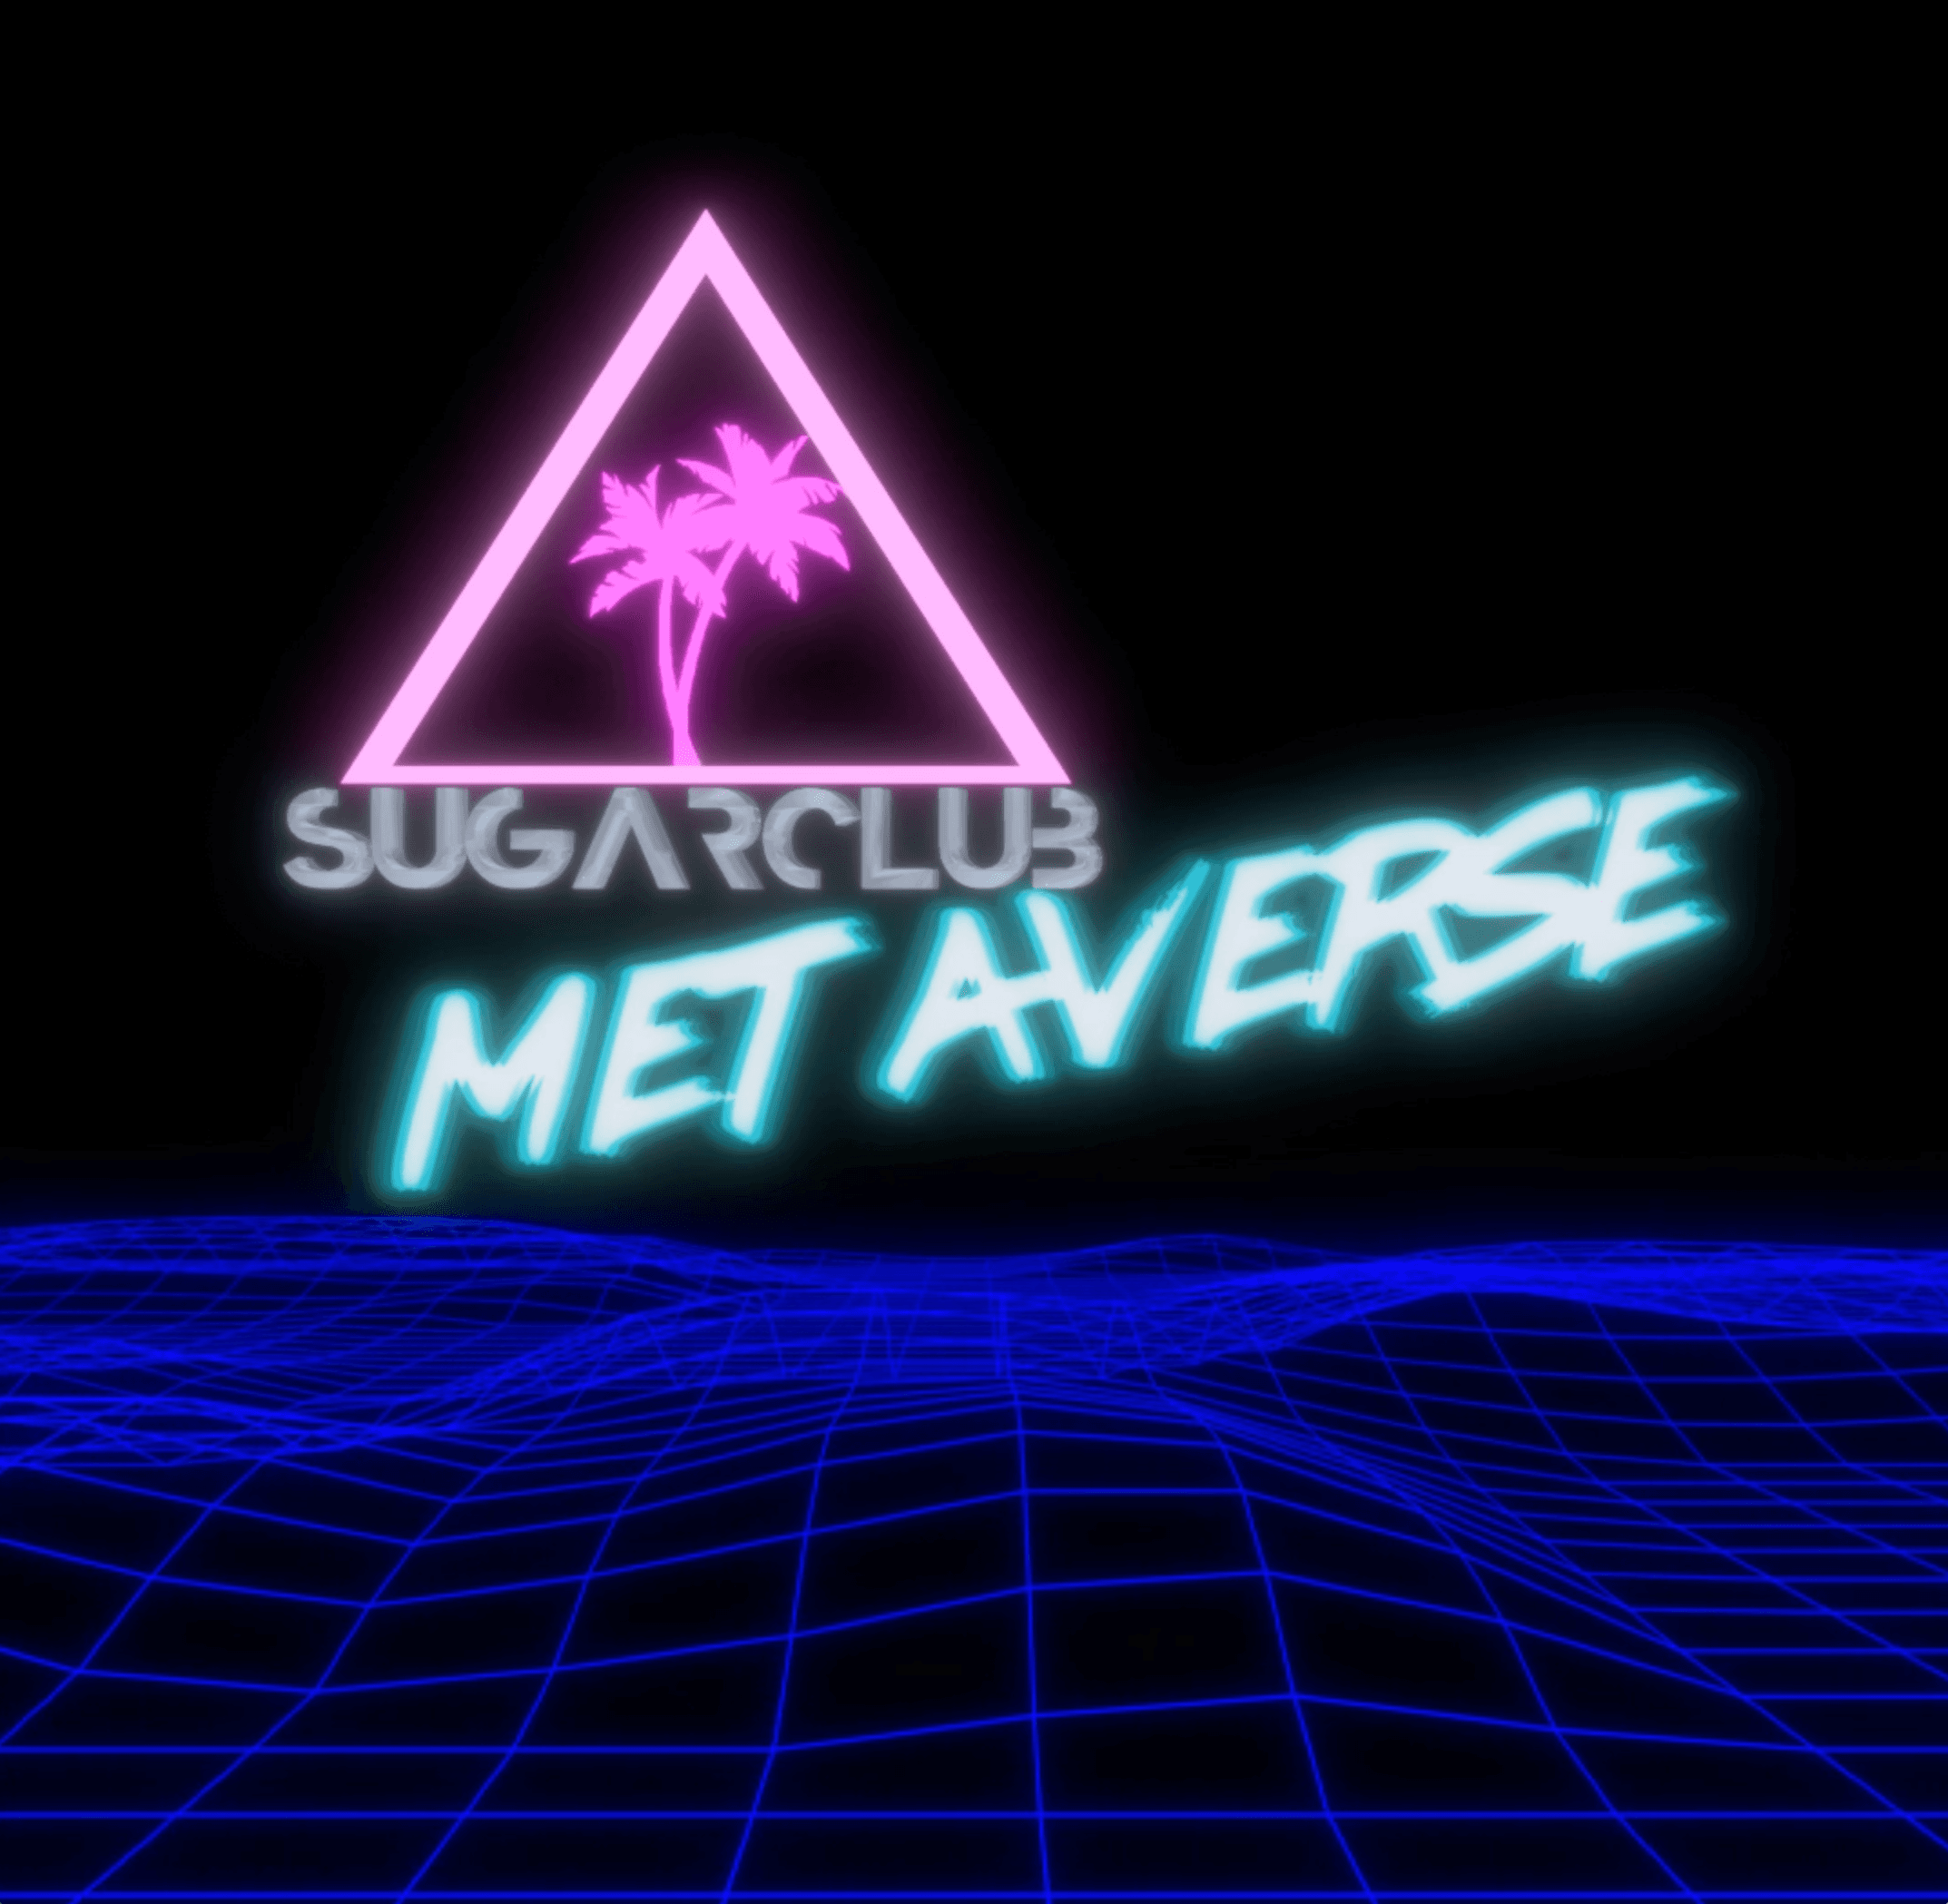 Sugar Club Metaverse